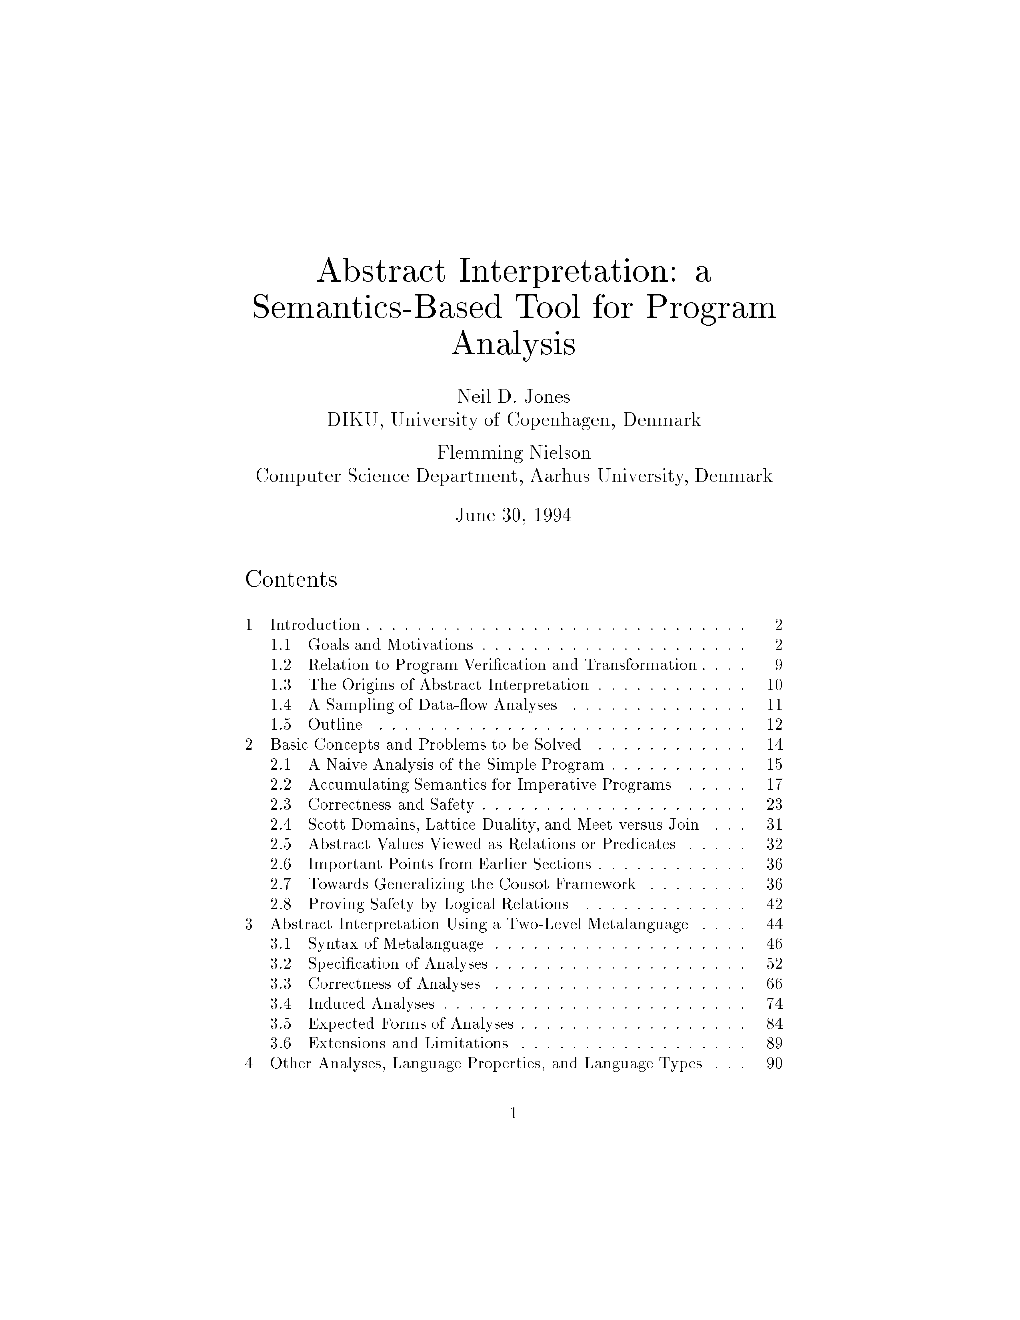 Abstract Interpretation: a Semantics-Based Tool for Program Analysis